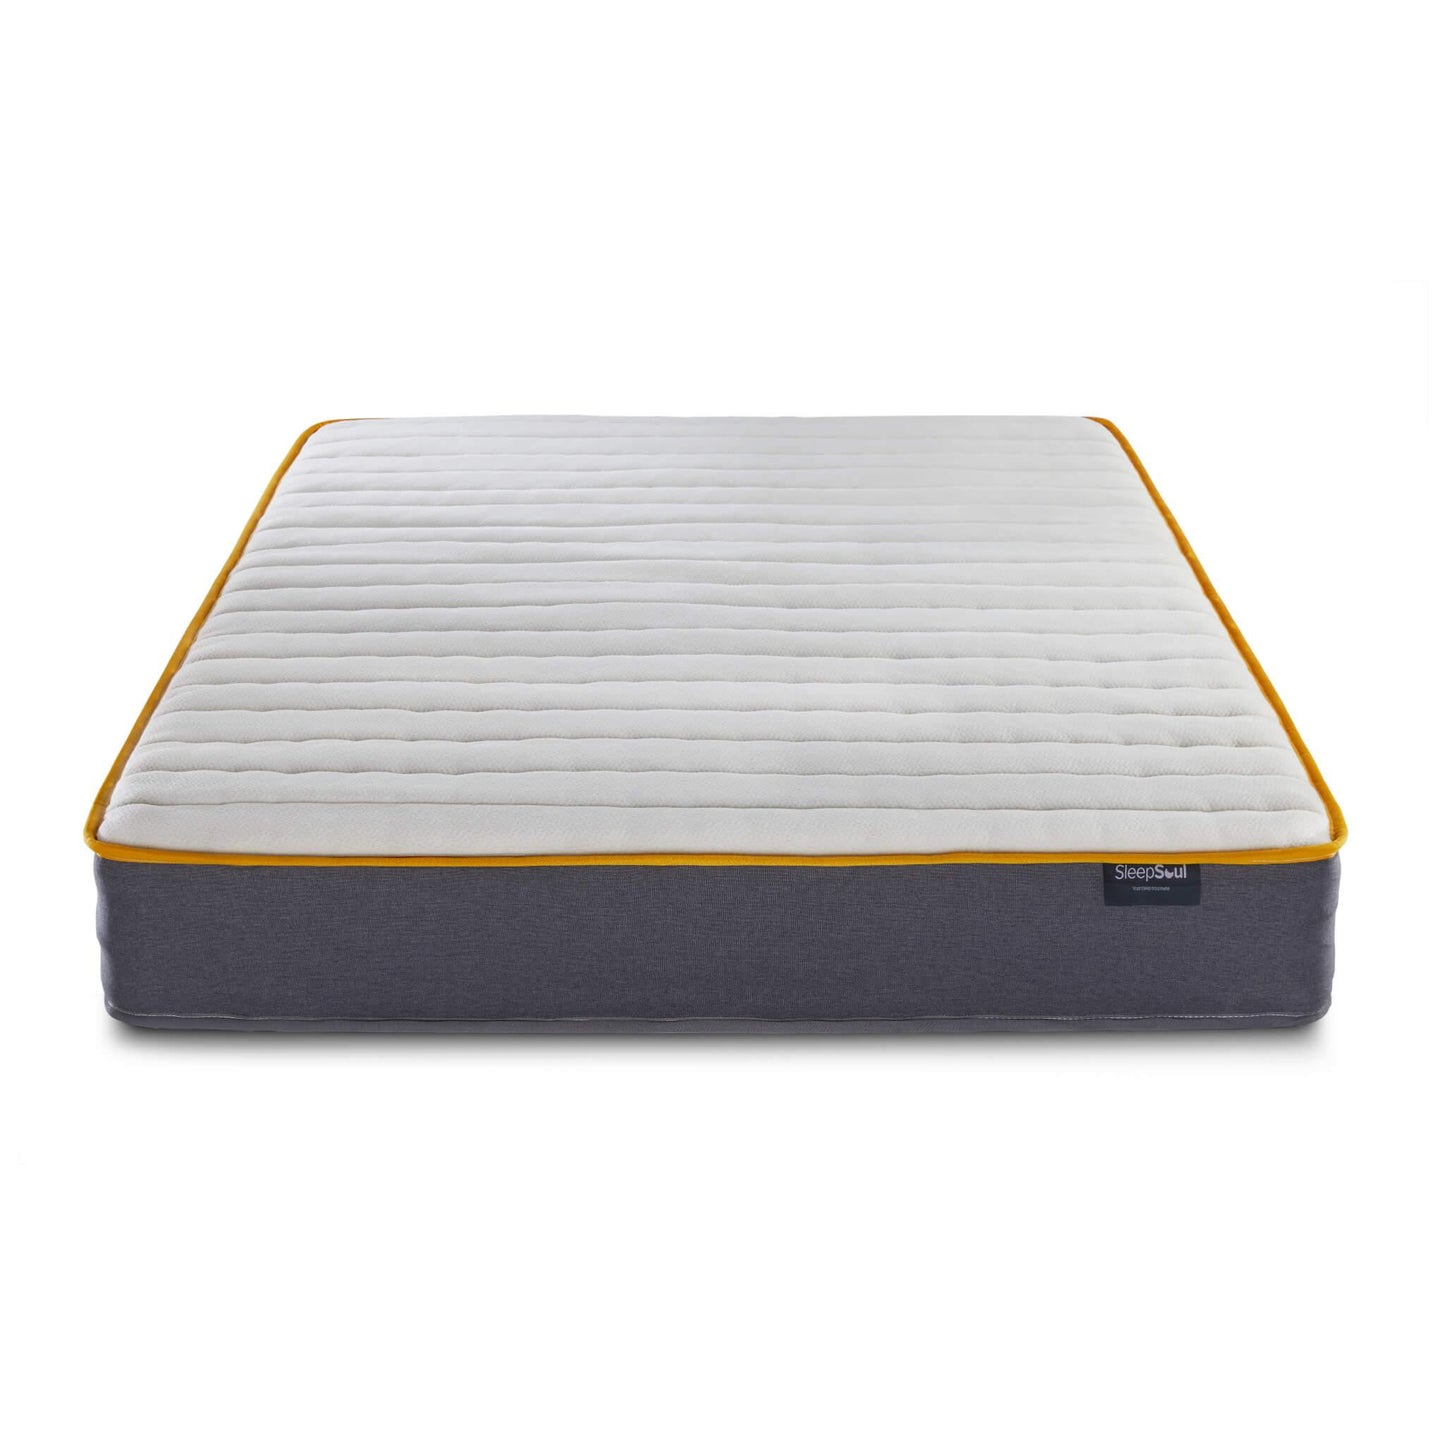 SleepSoul balance 800 pocket spring and memory foam small double mattress top